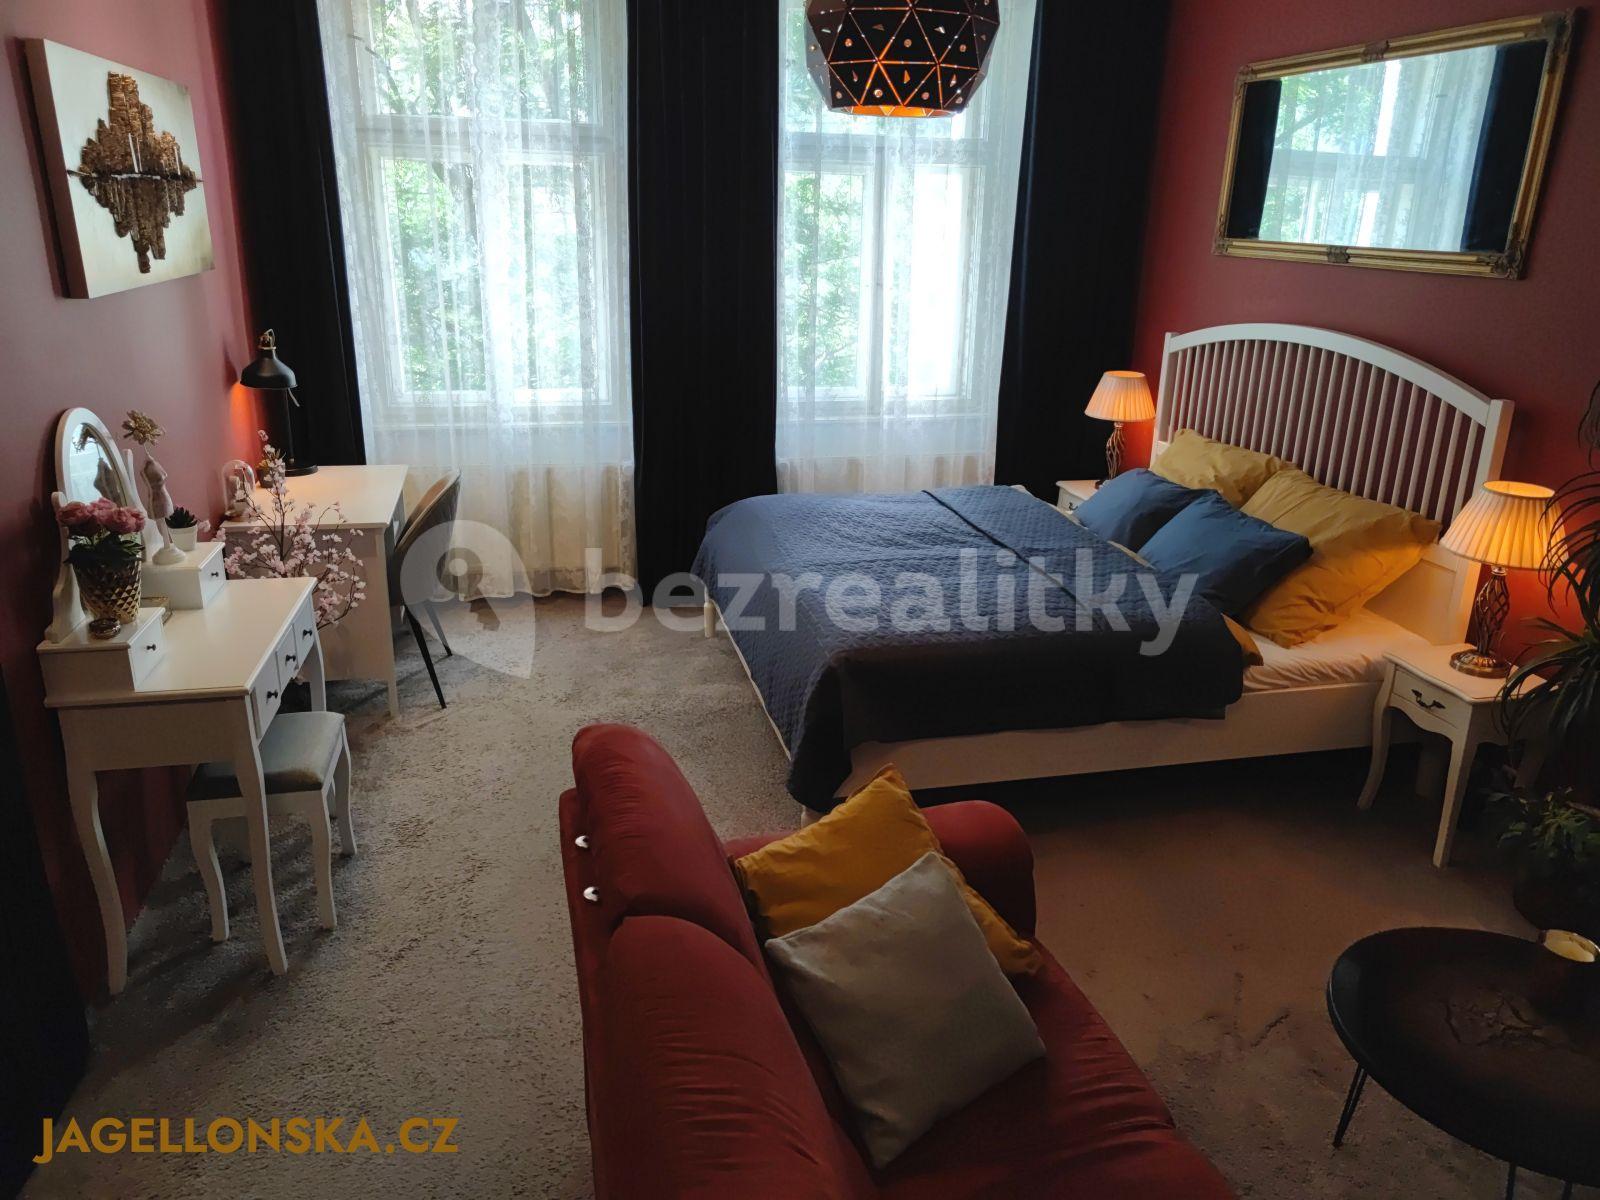 1 bedroom with open-plan kitchen flat to rent, 50 m², Jagellonská, Prague, Prague